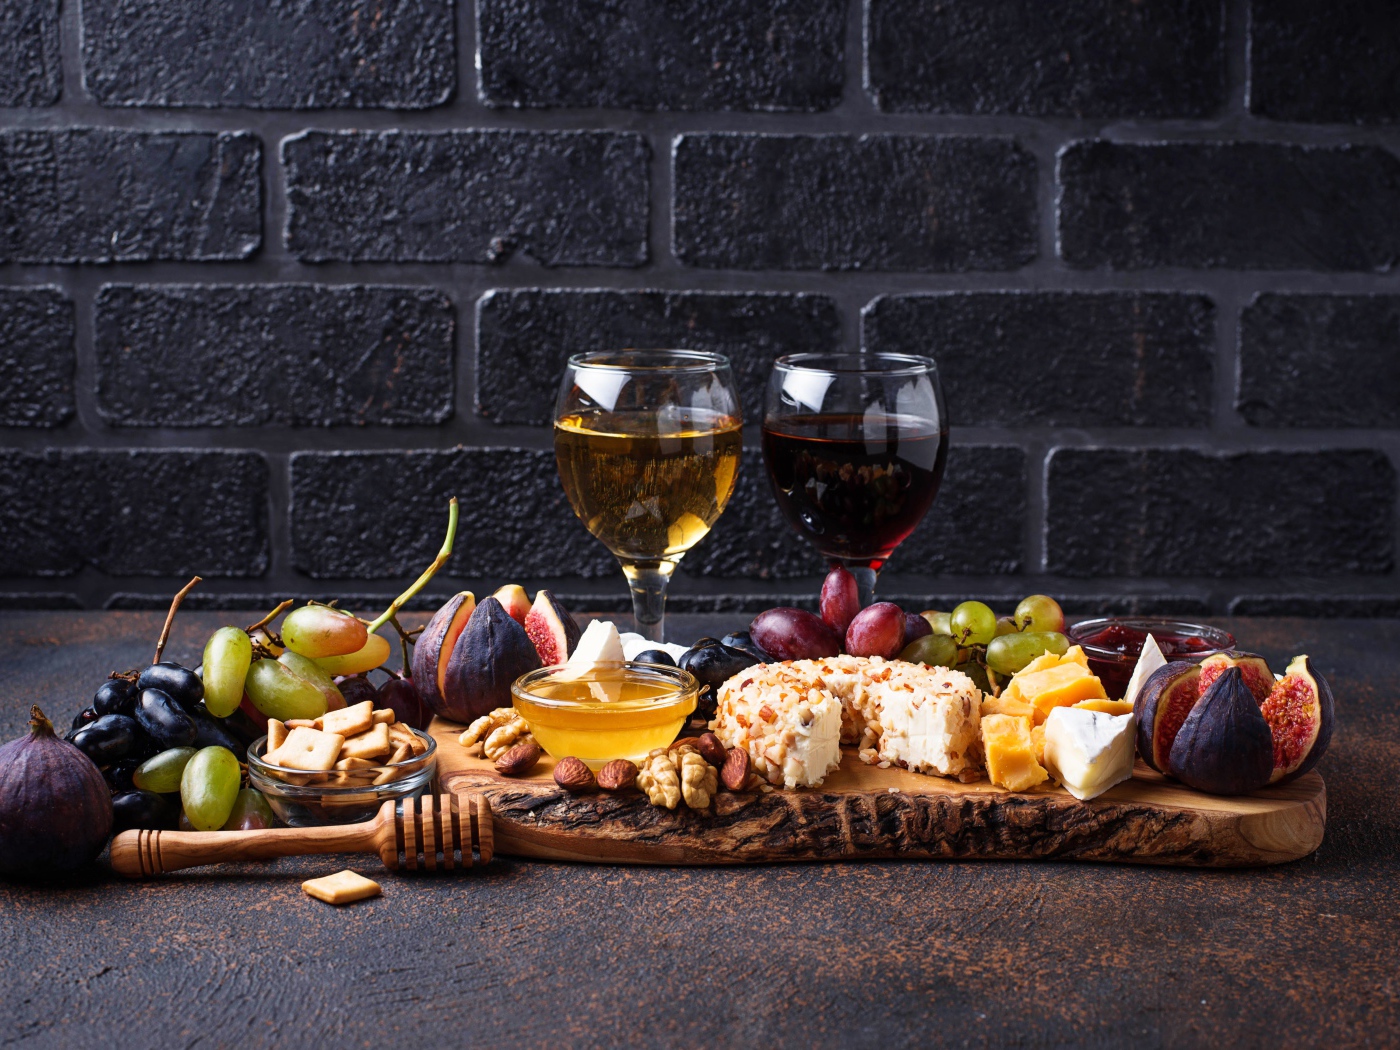 Два бокала вина на столе с сыром, инжиром и виноградом